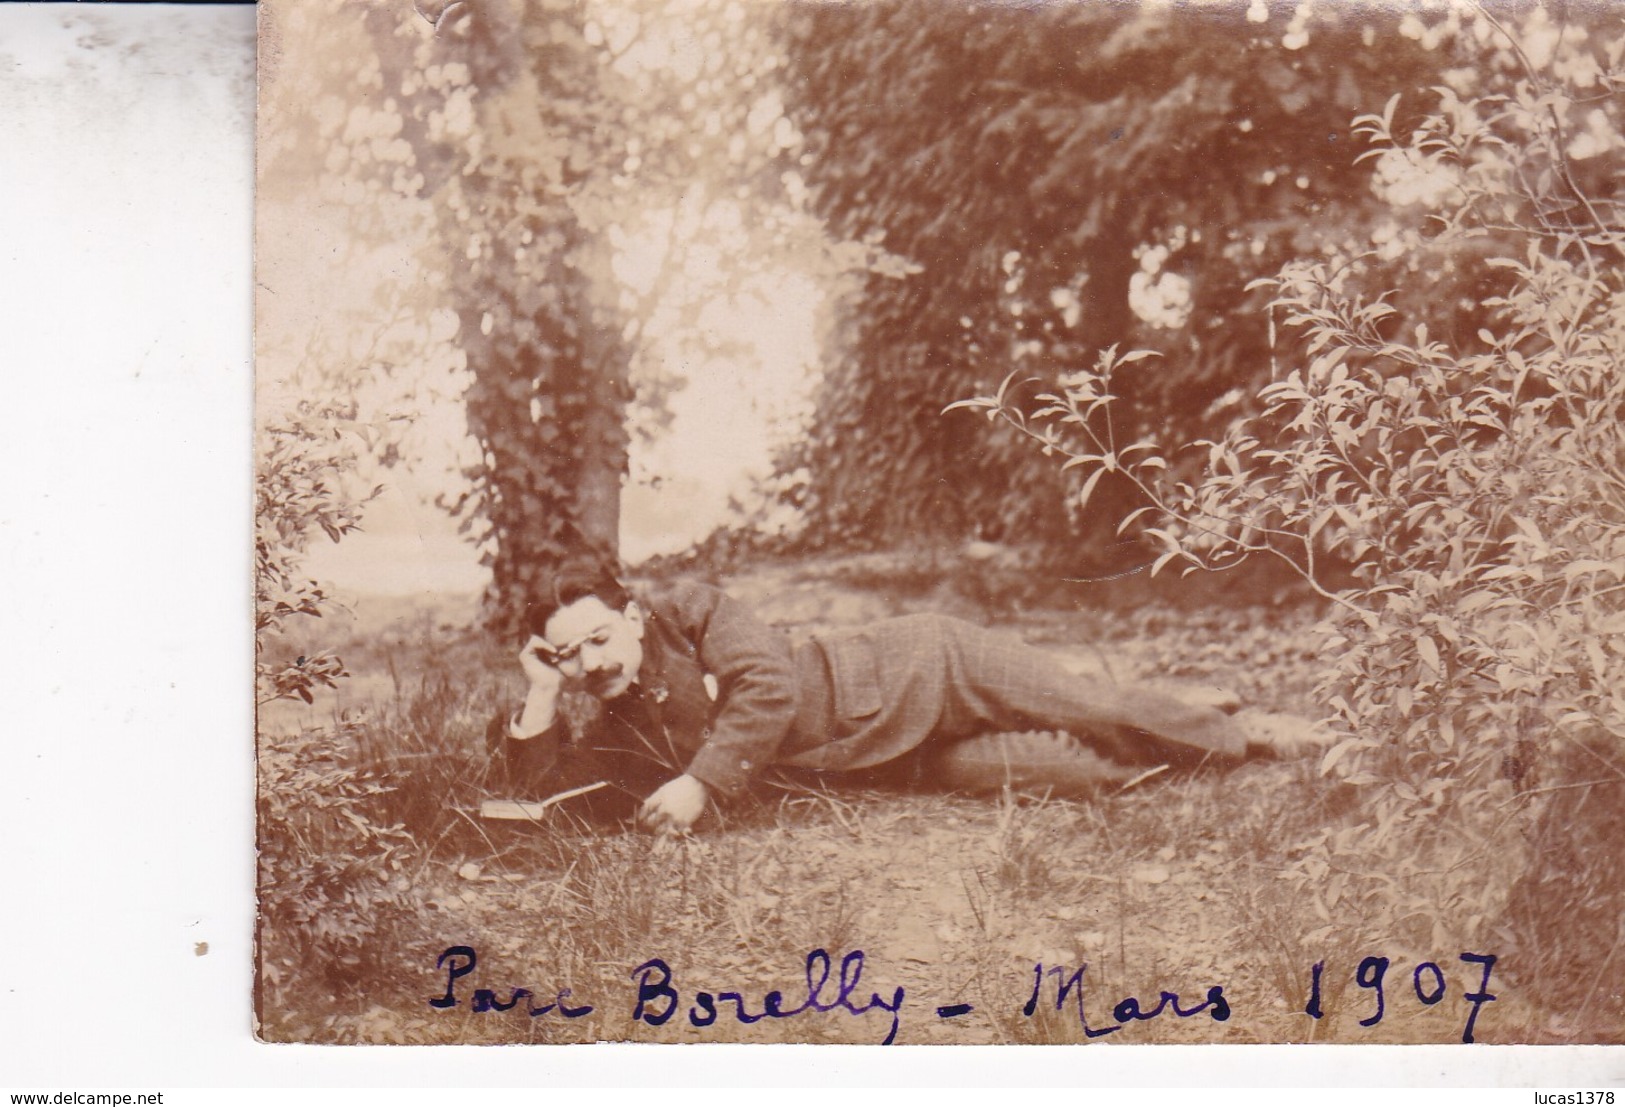 JOLI PHOTO MARSEILLE / PARC BORELY / MARS 1907 - Parques, Jardines